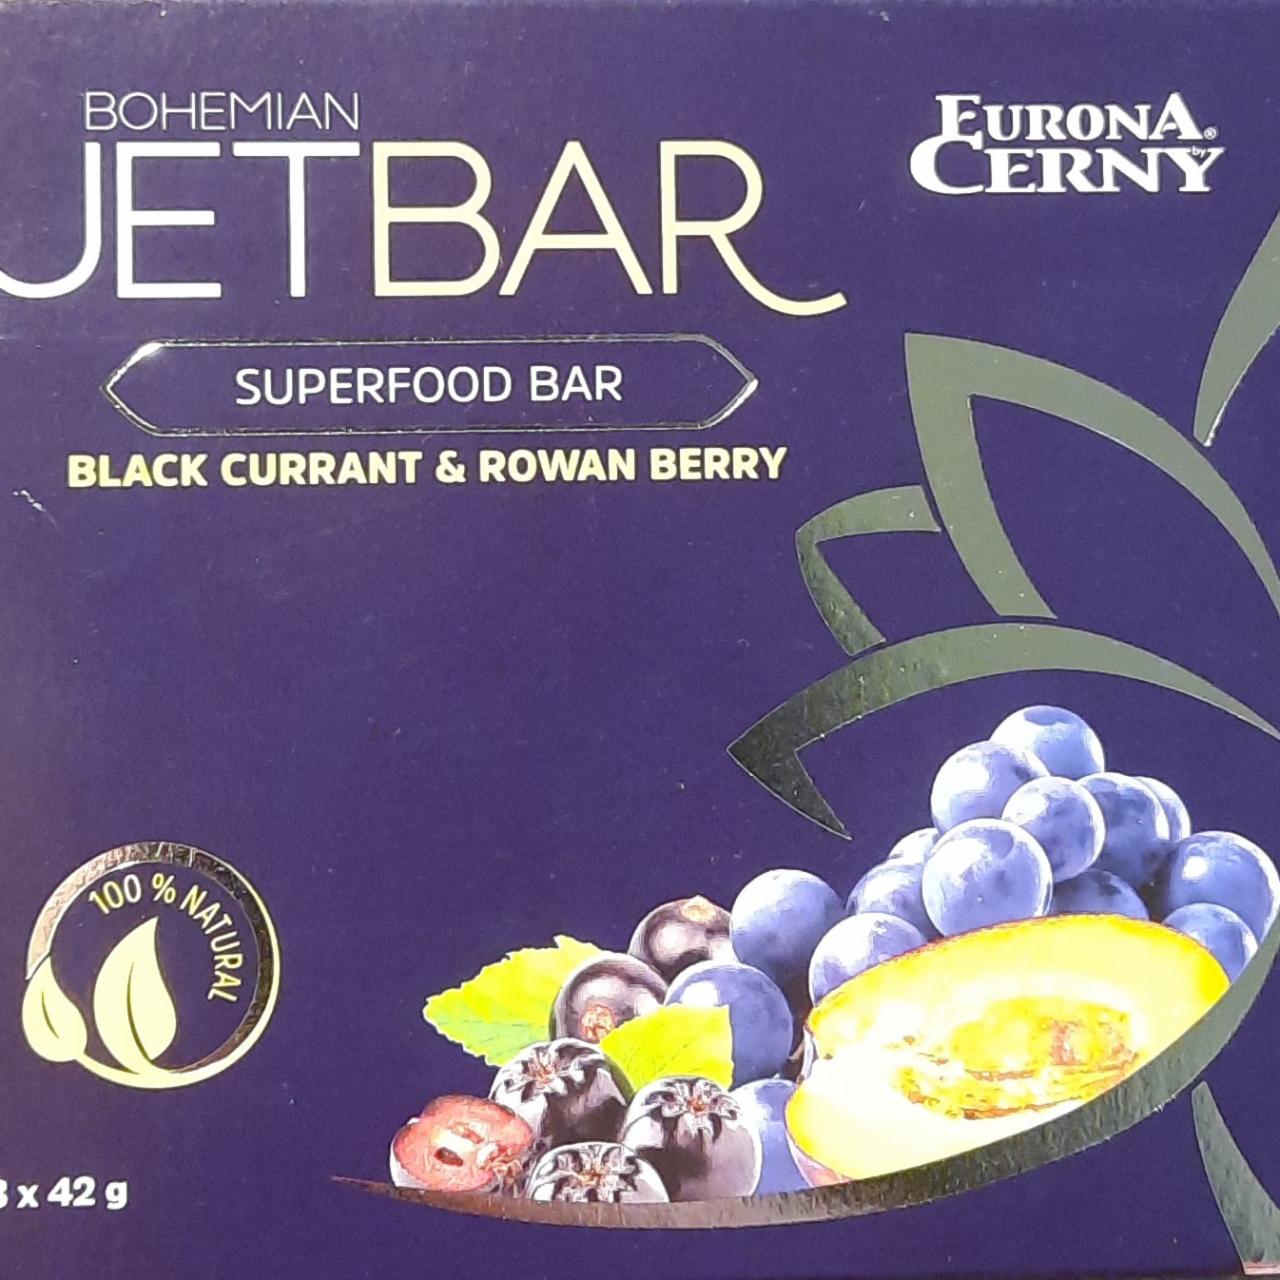 Fotografie - Bohemian Jetbar Superfood Bar Black Currant & Rowan Berry Eurona Cerny